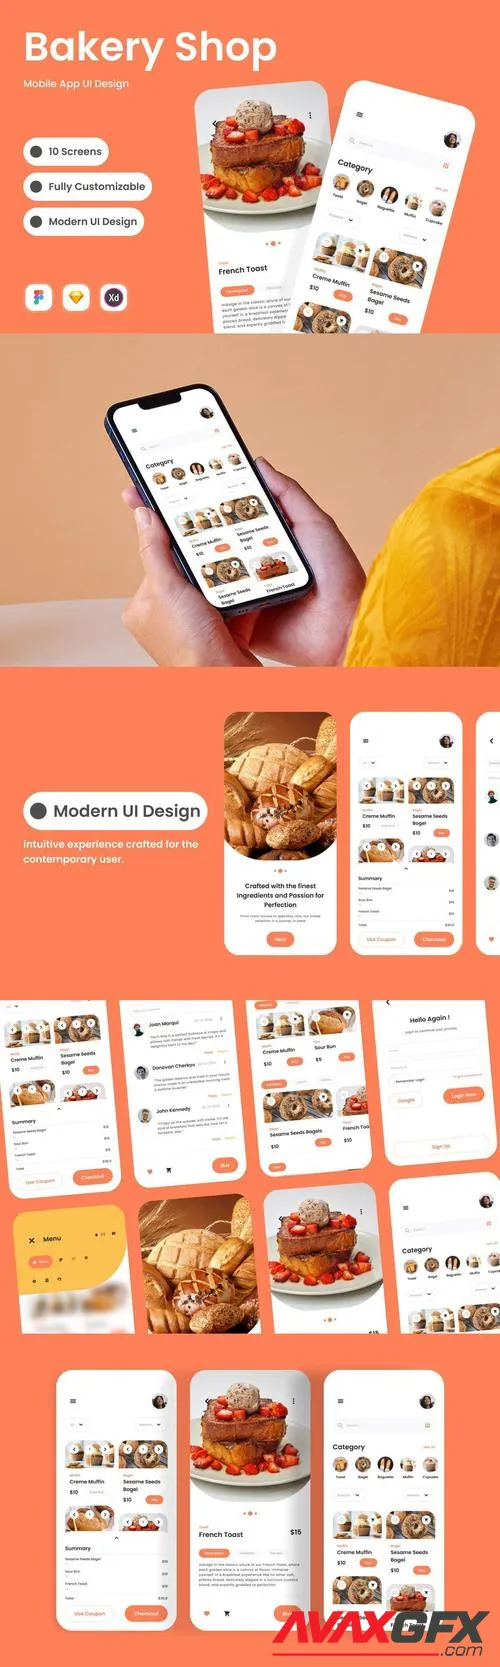 Artisan Crust - Bakery Shop Mobile App